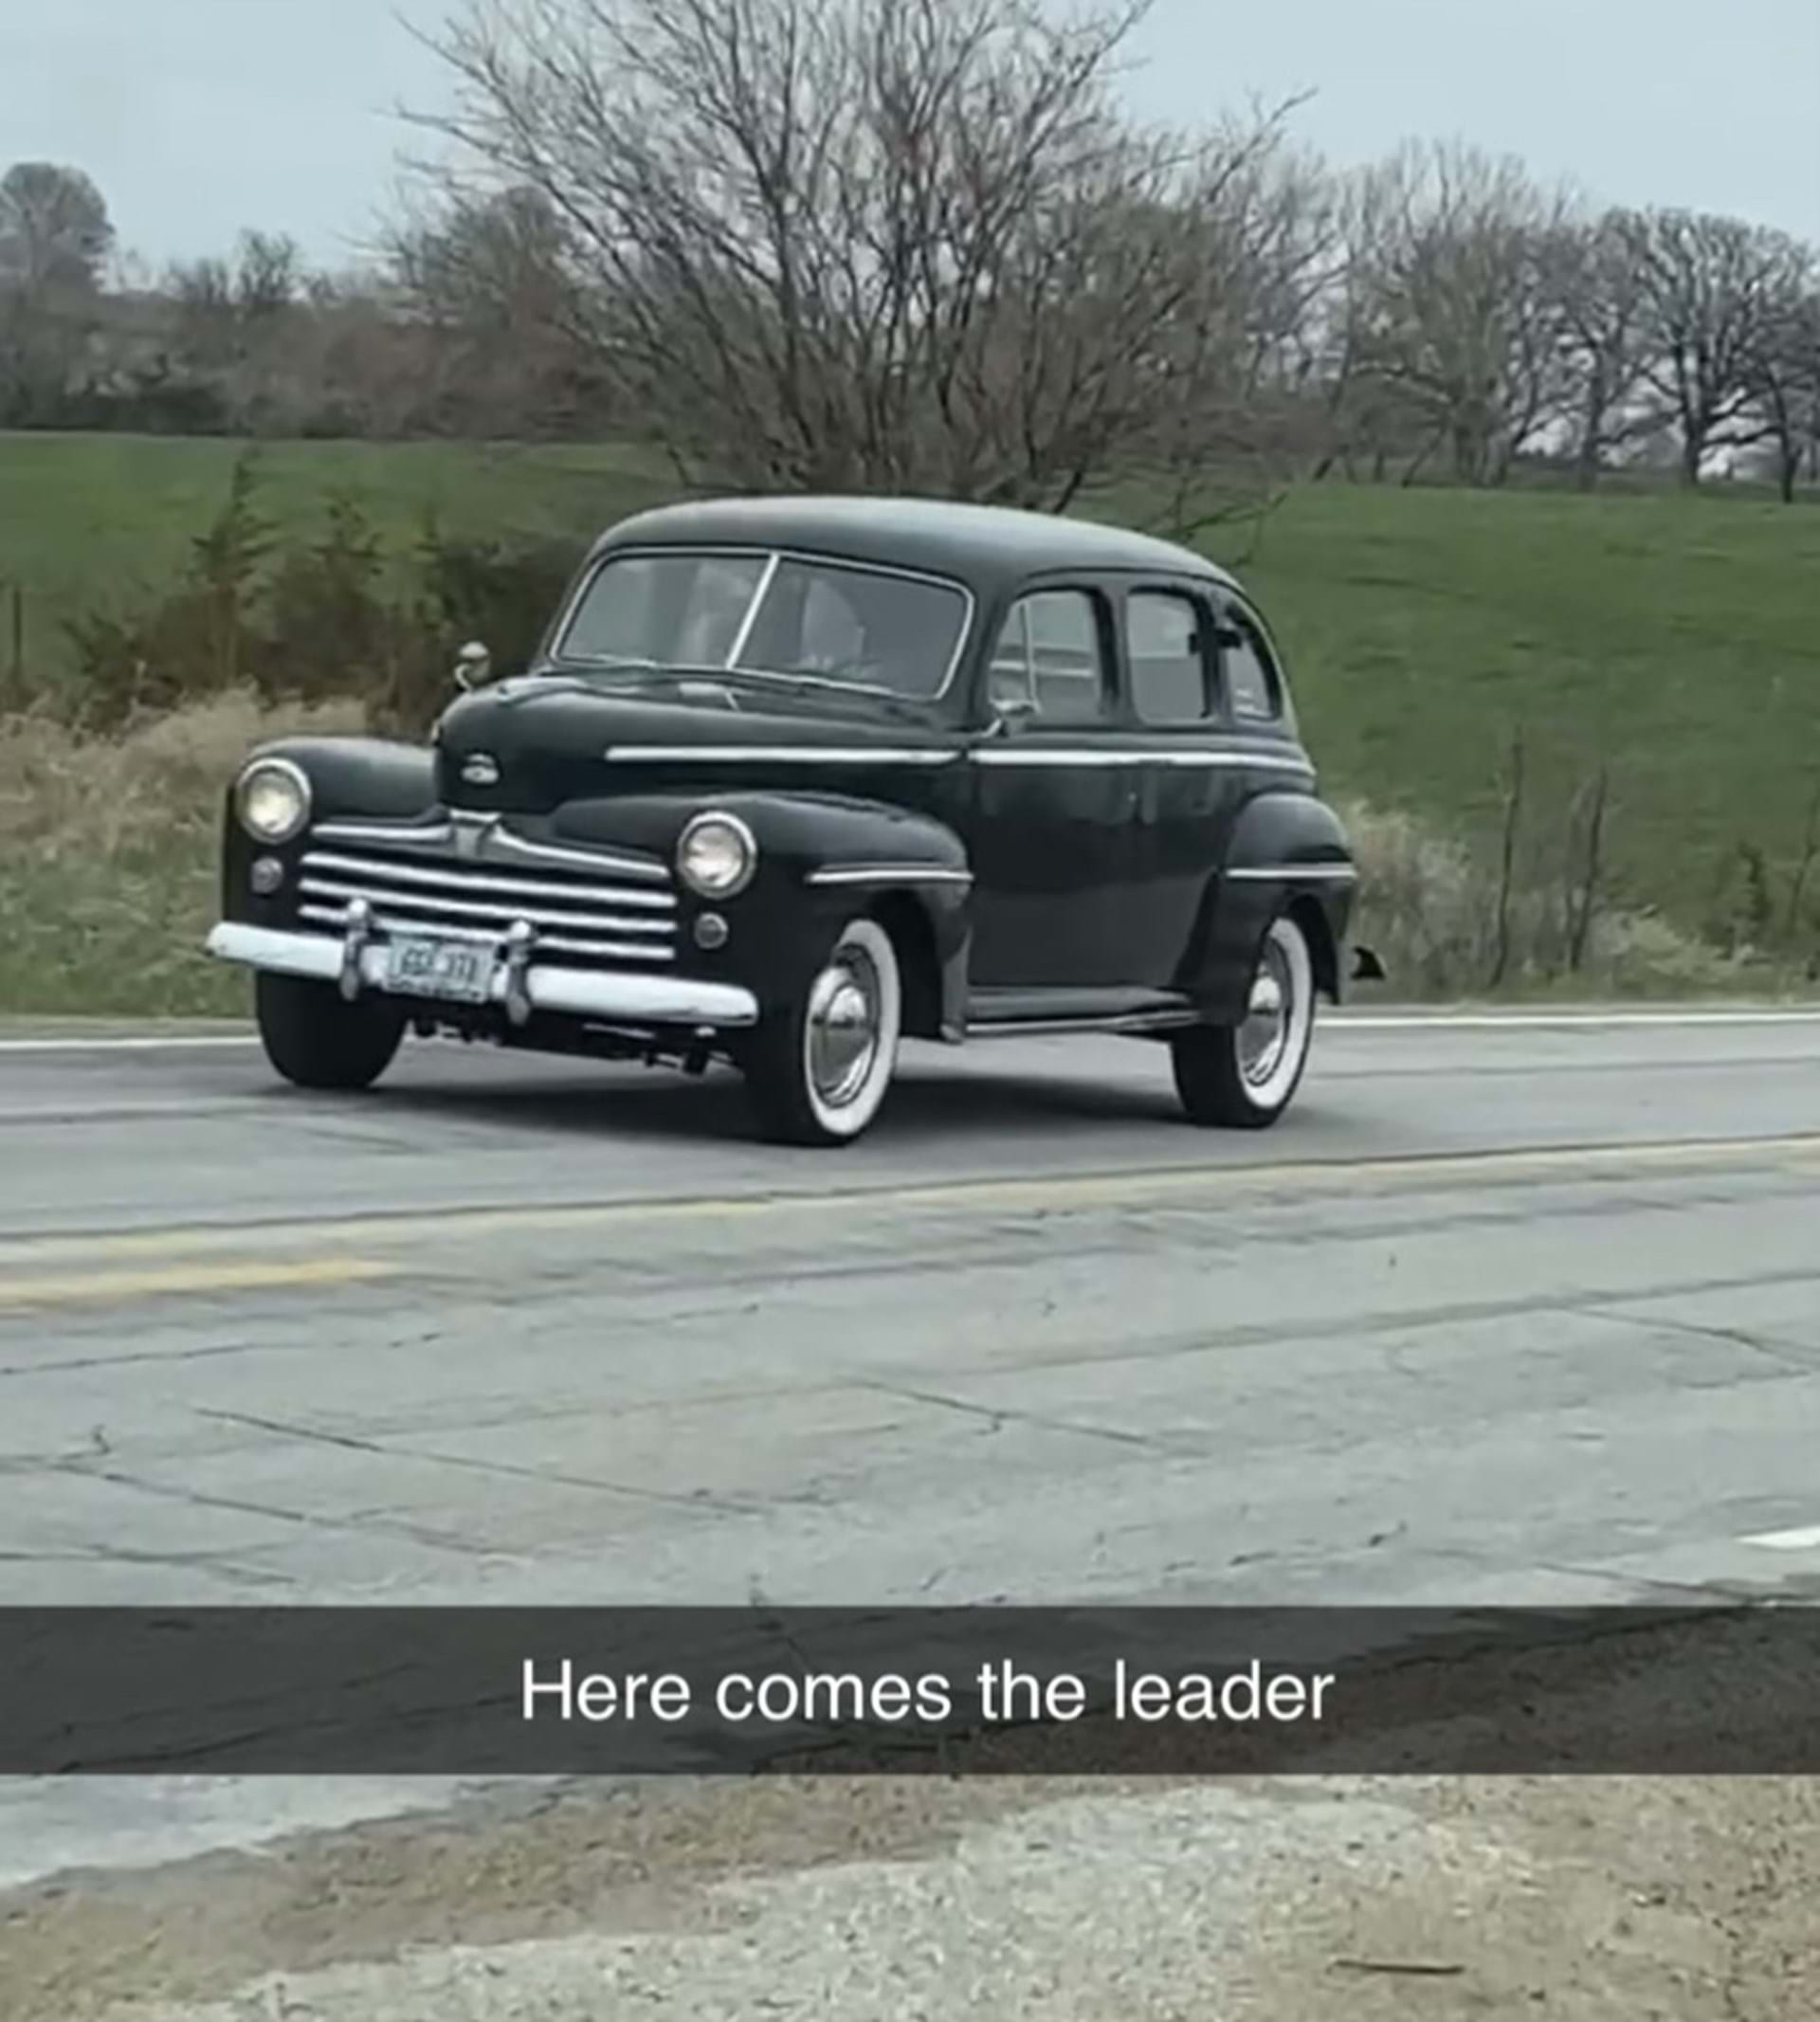 Lead car